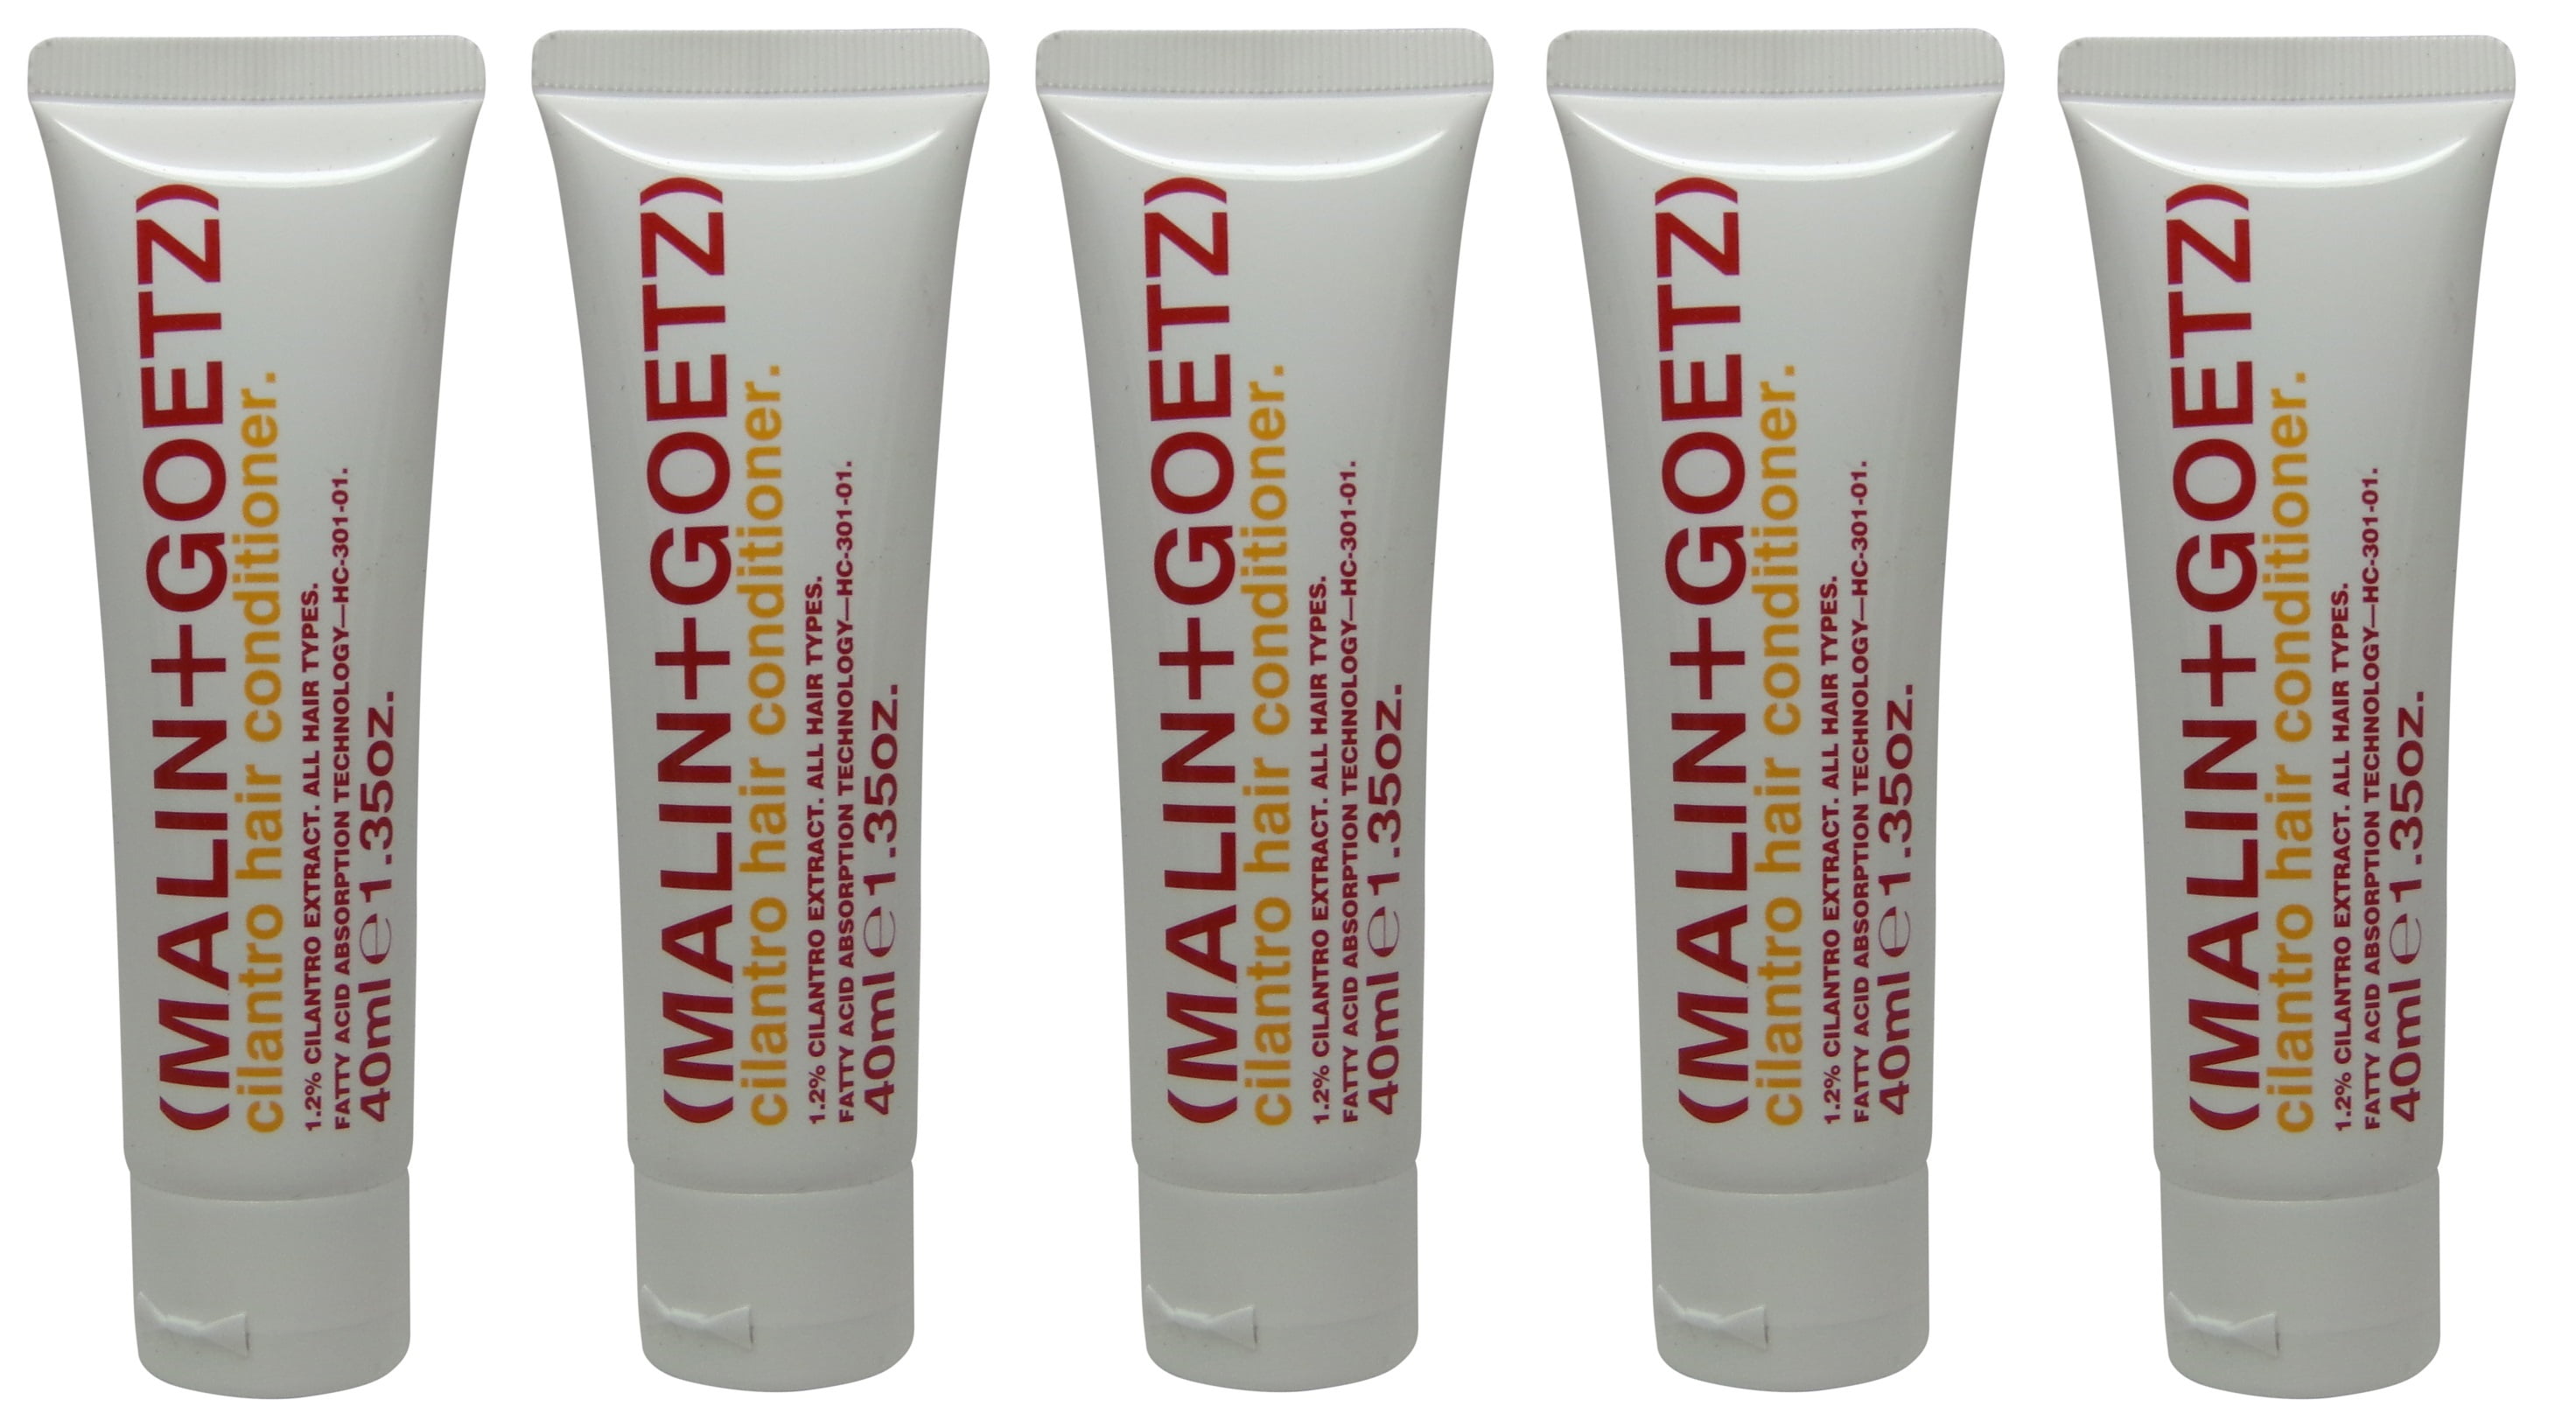 Malin + Goetz Peppermint Shampoo and Conditioner lot 10 tubes (5 each) 1.35oz - Walmart.com